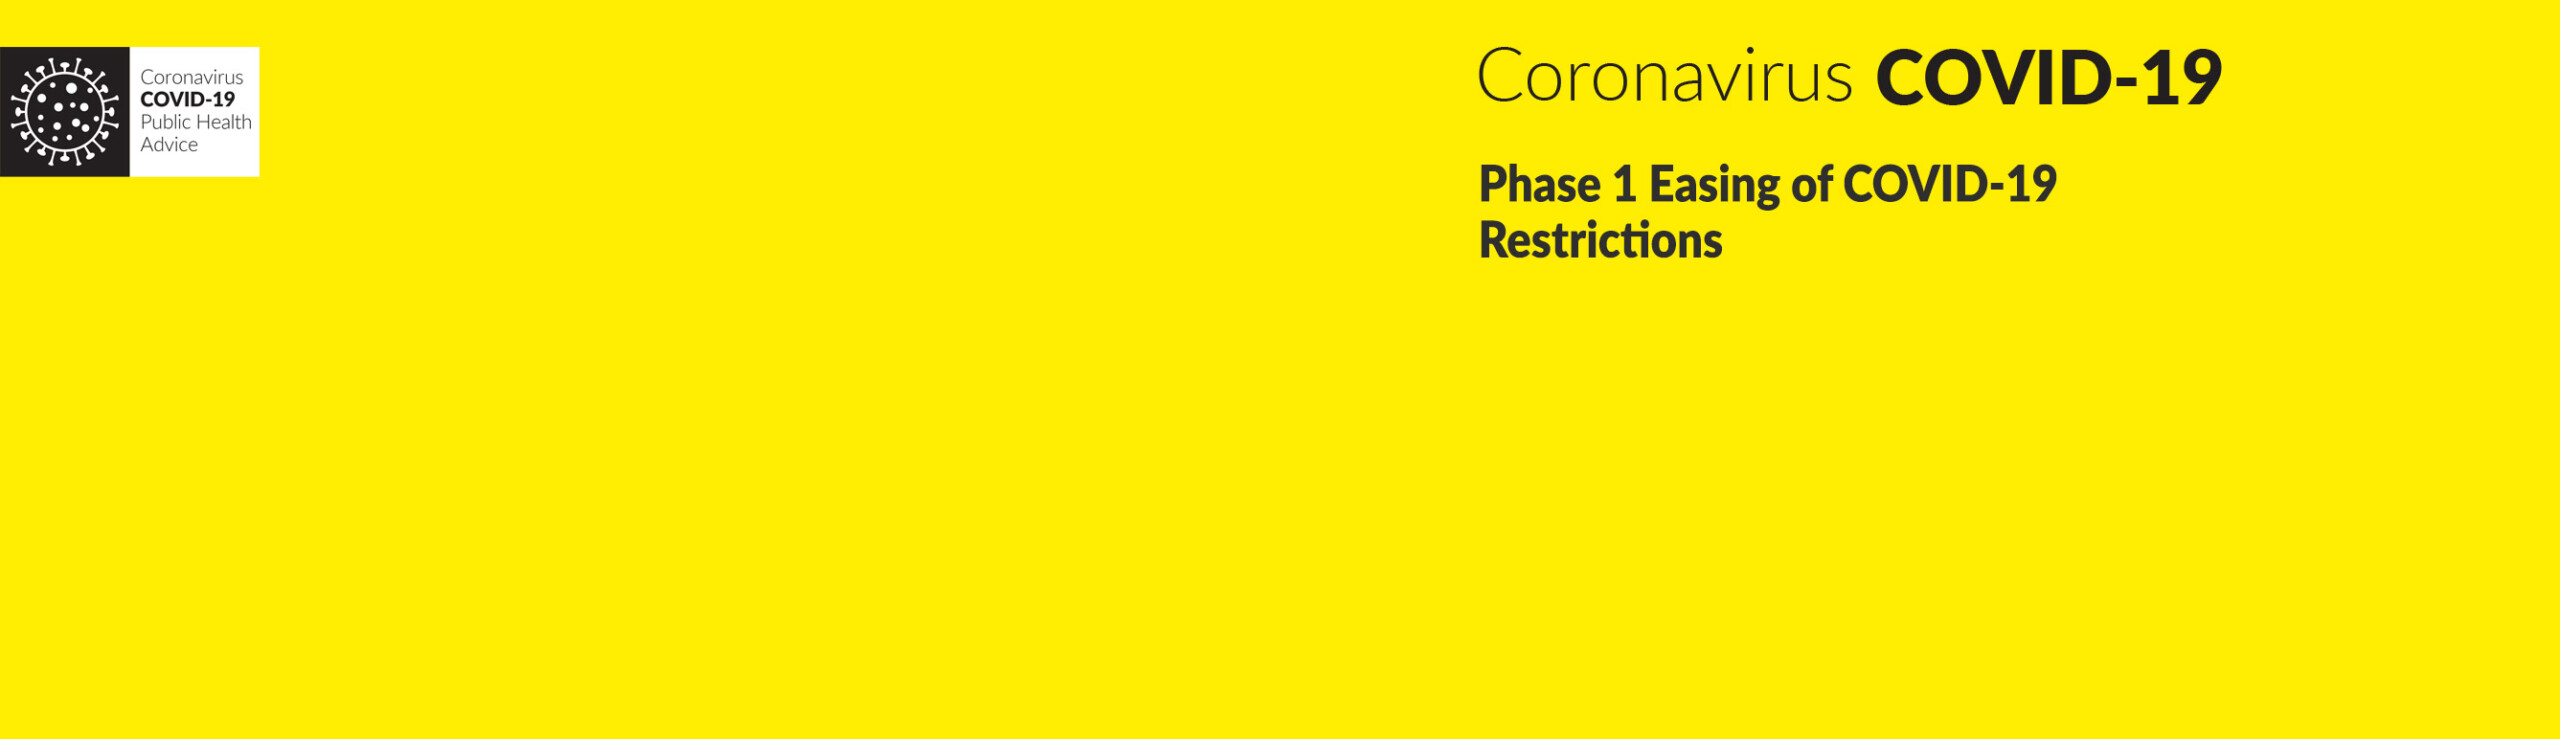 Corona-Virus-Phase-1-Banner-2020_2